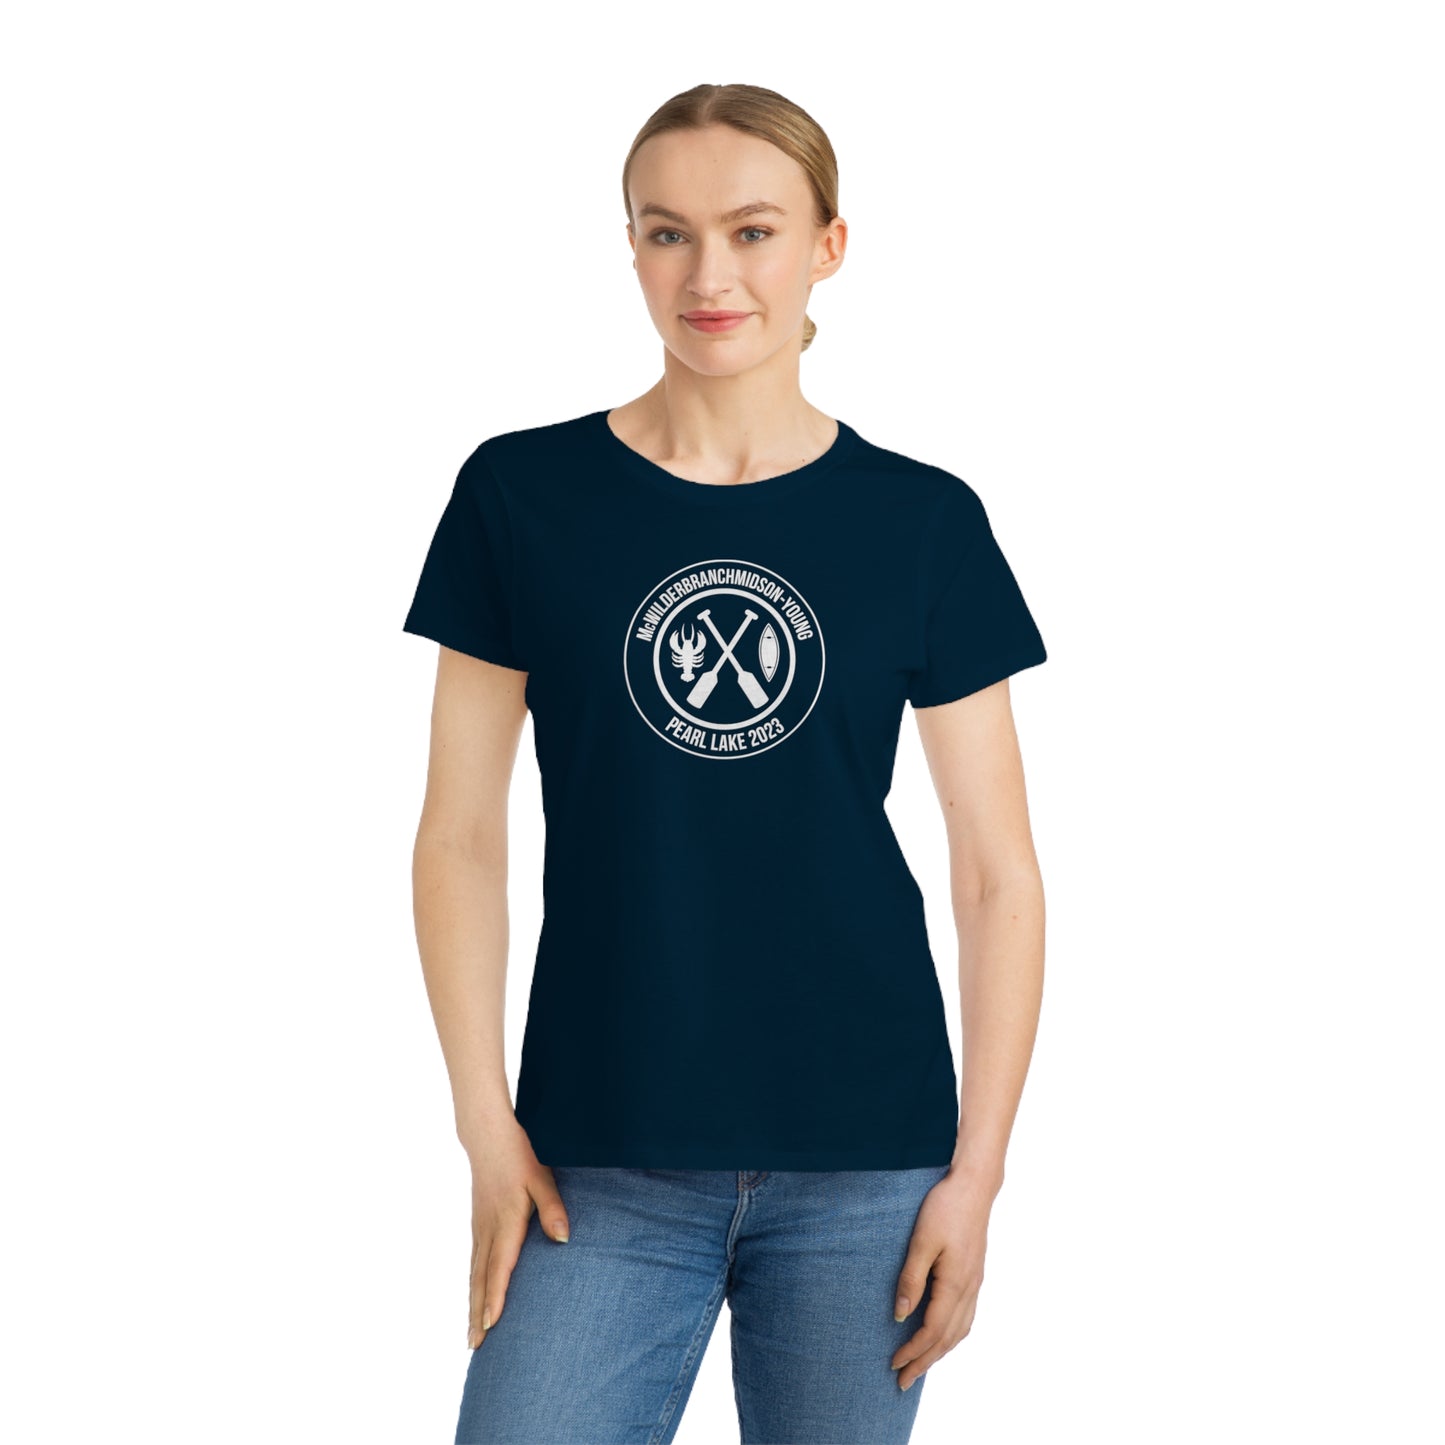 Pearl Lake Women's Organic T-Shirt (Dark)